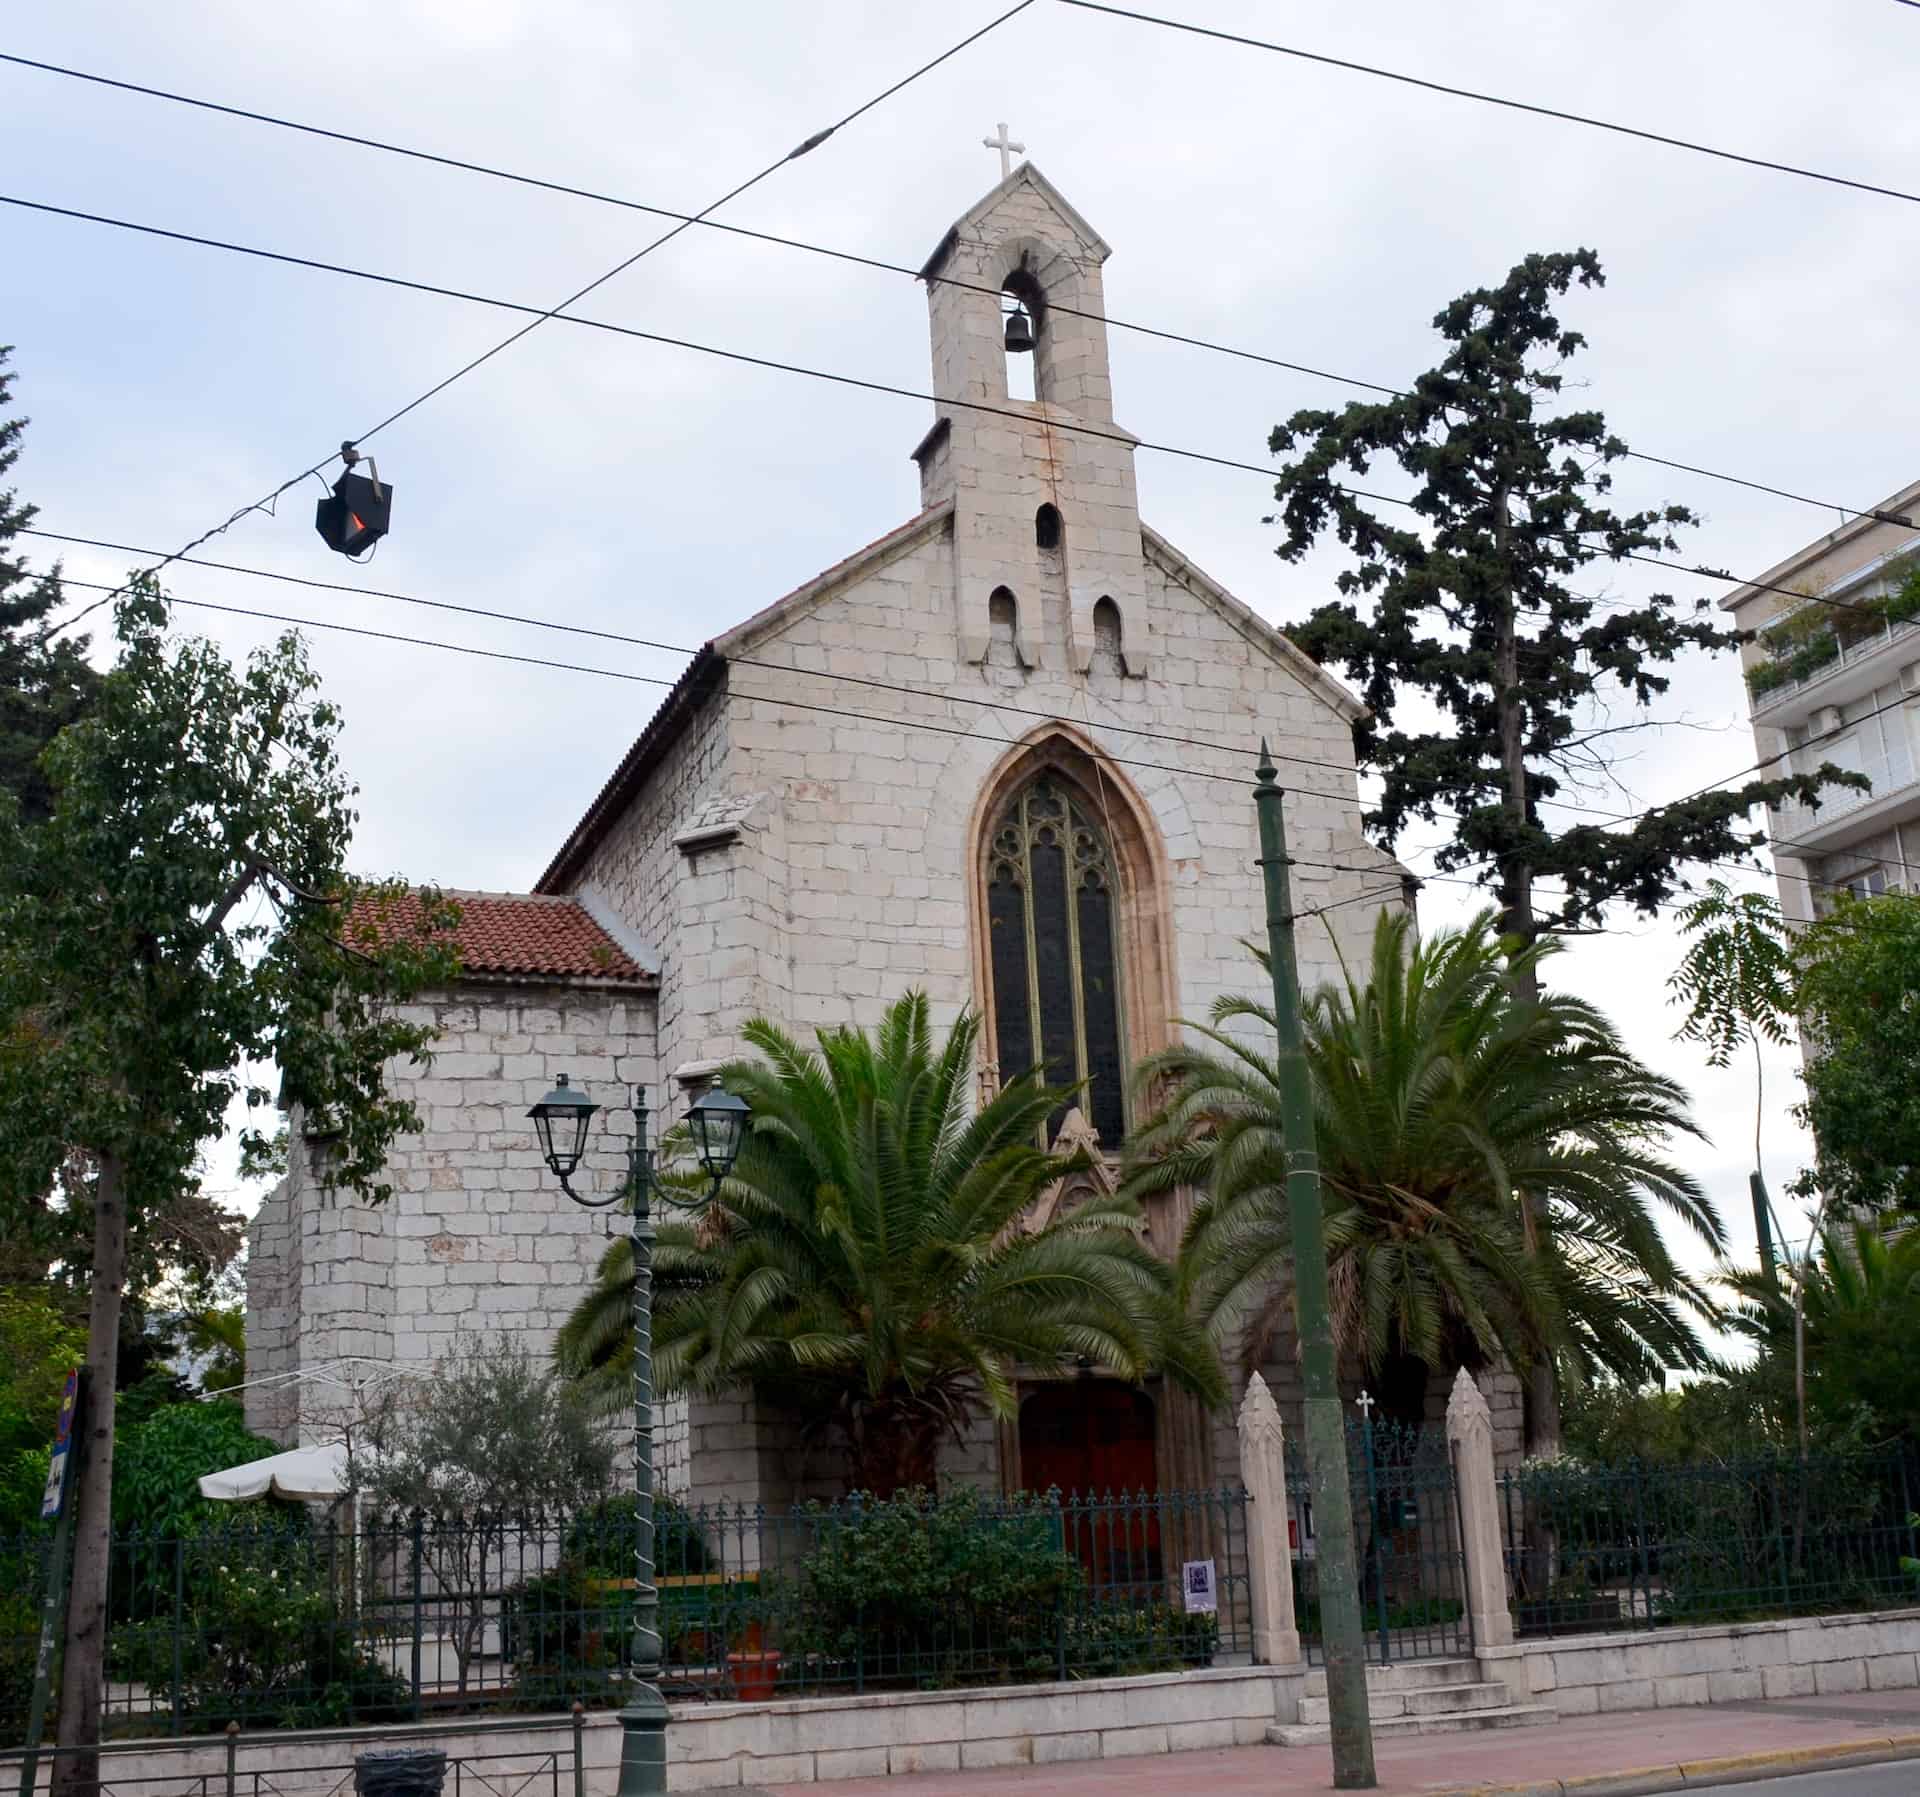 Saint Paul's Anglican Church in Syntagma, Athens, Greece